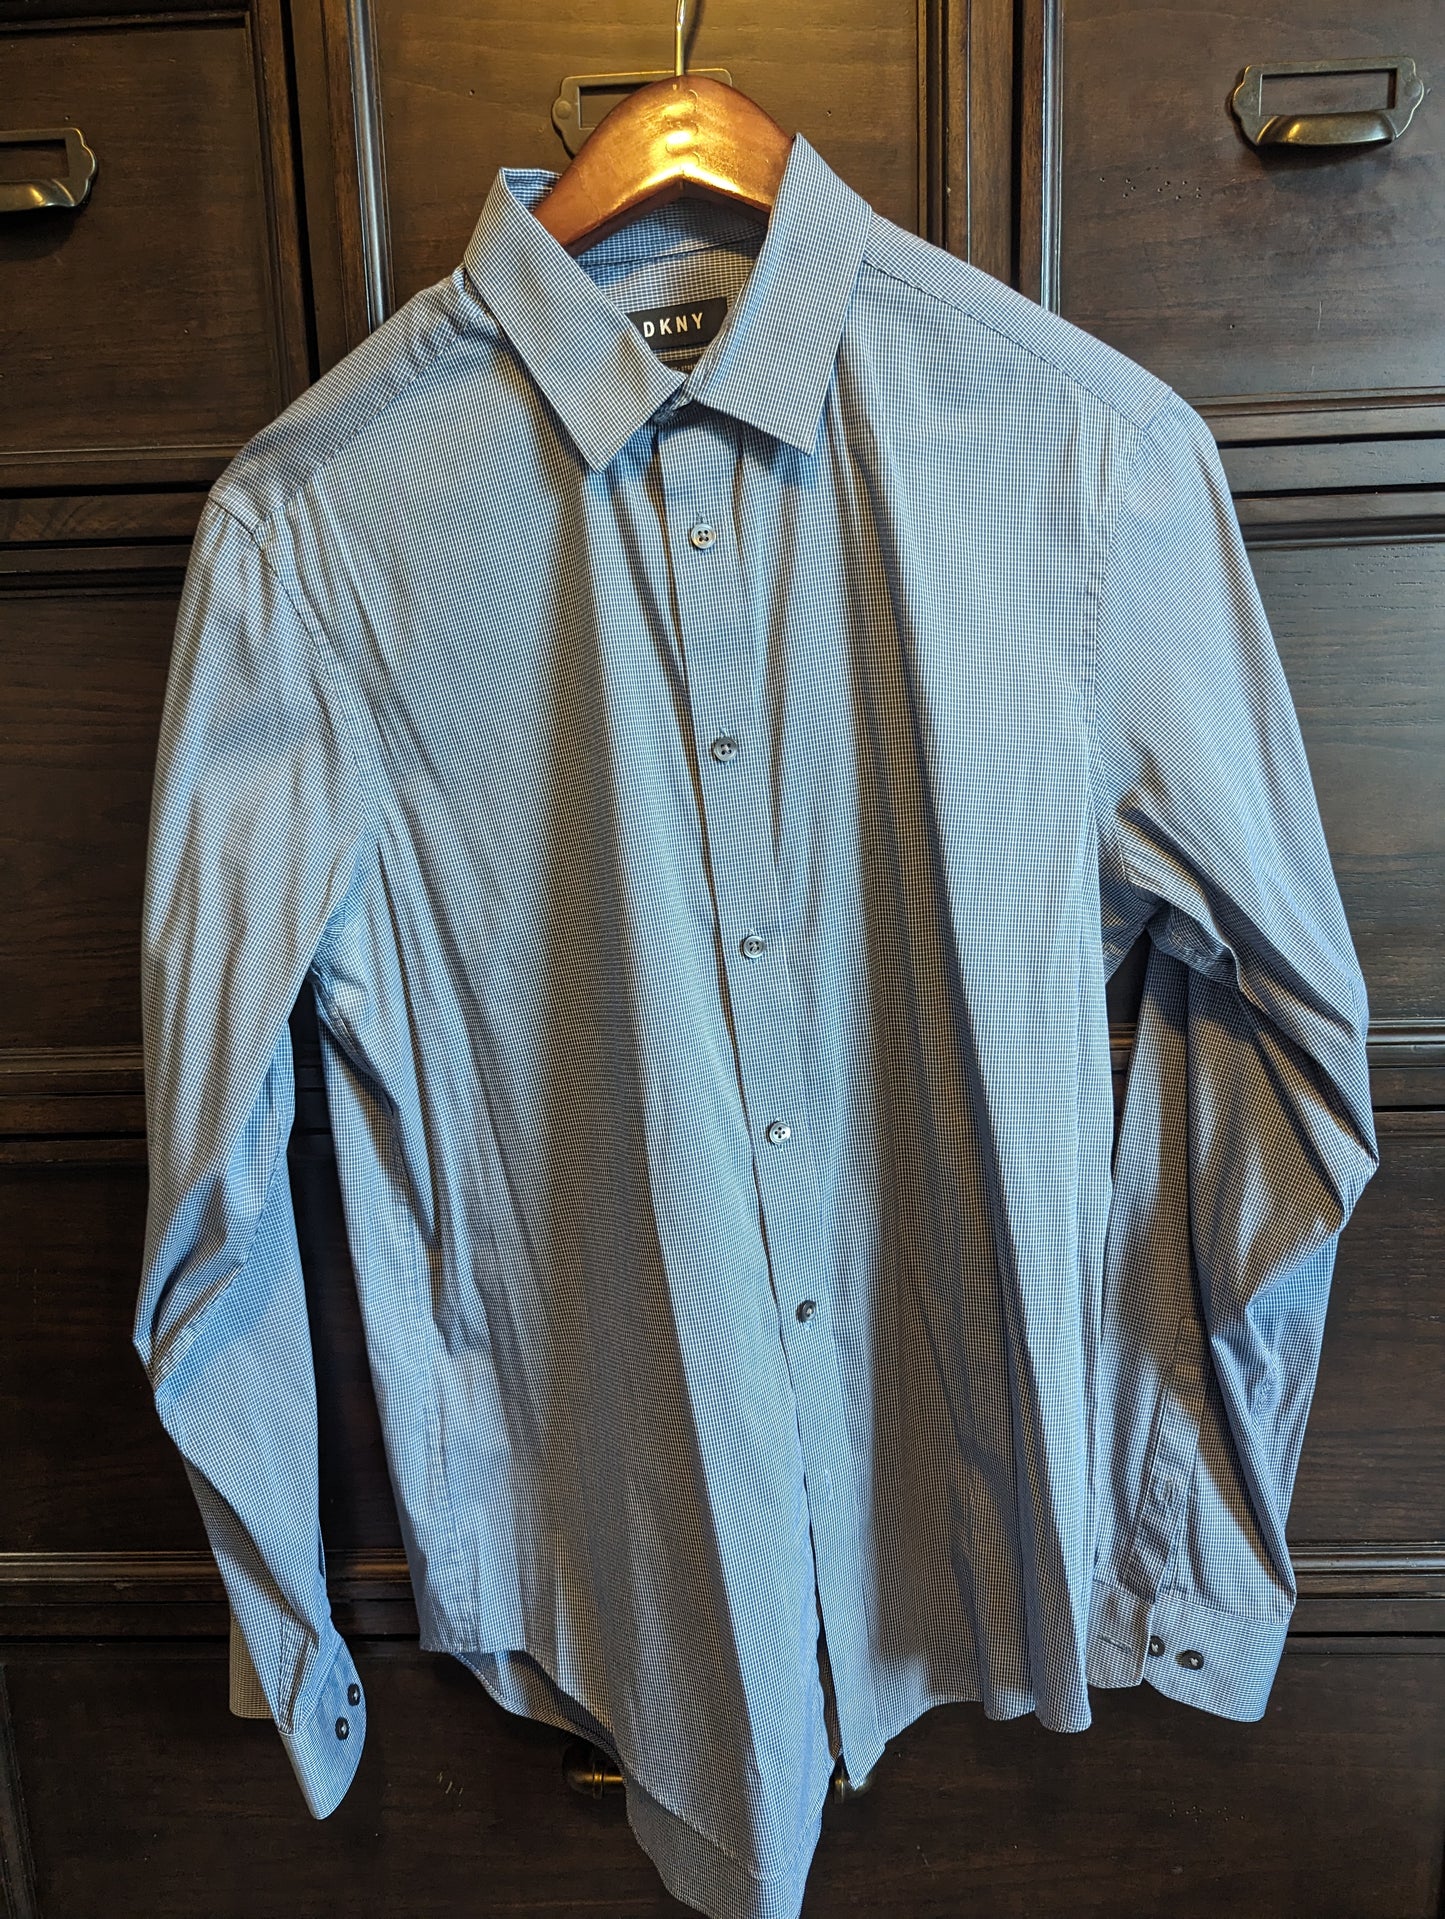 DKNY dress shirt slim fit stretch 15-15.5, 34/35, M, VGUC